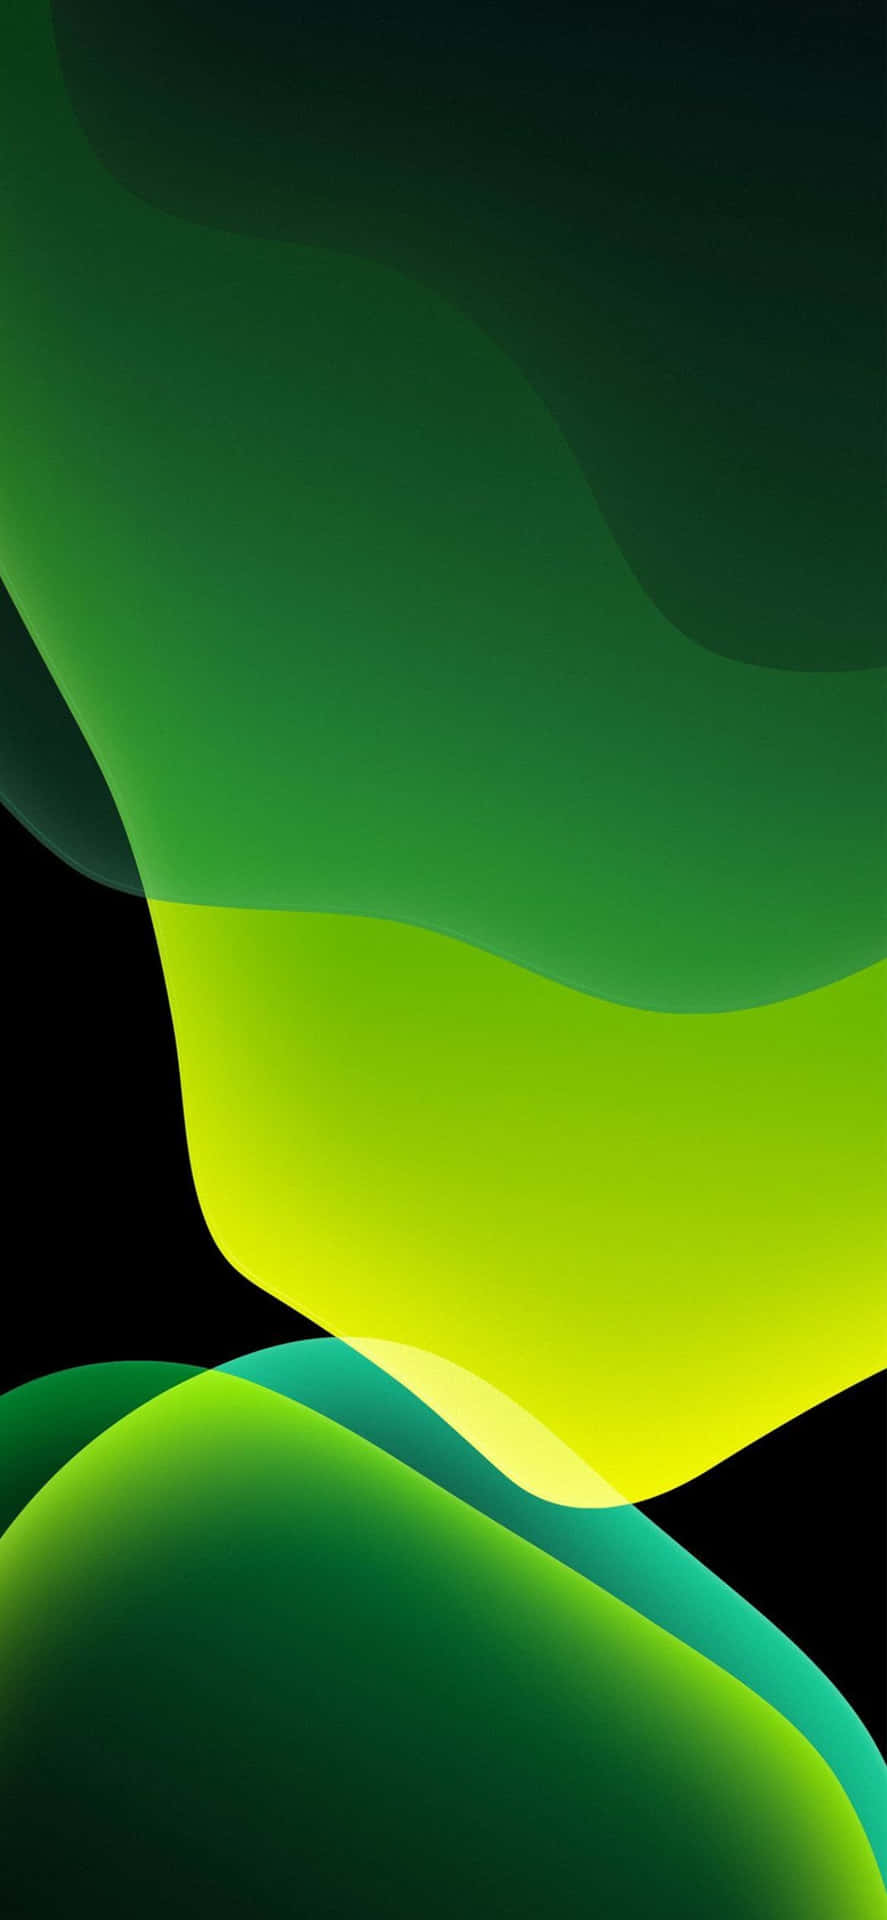 iOS 13 Green Shades Background